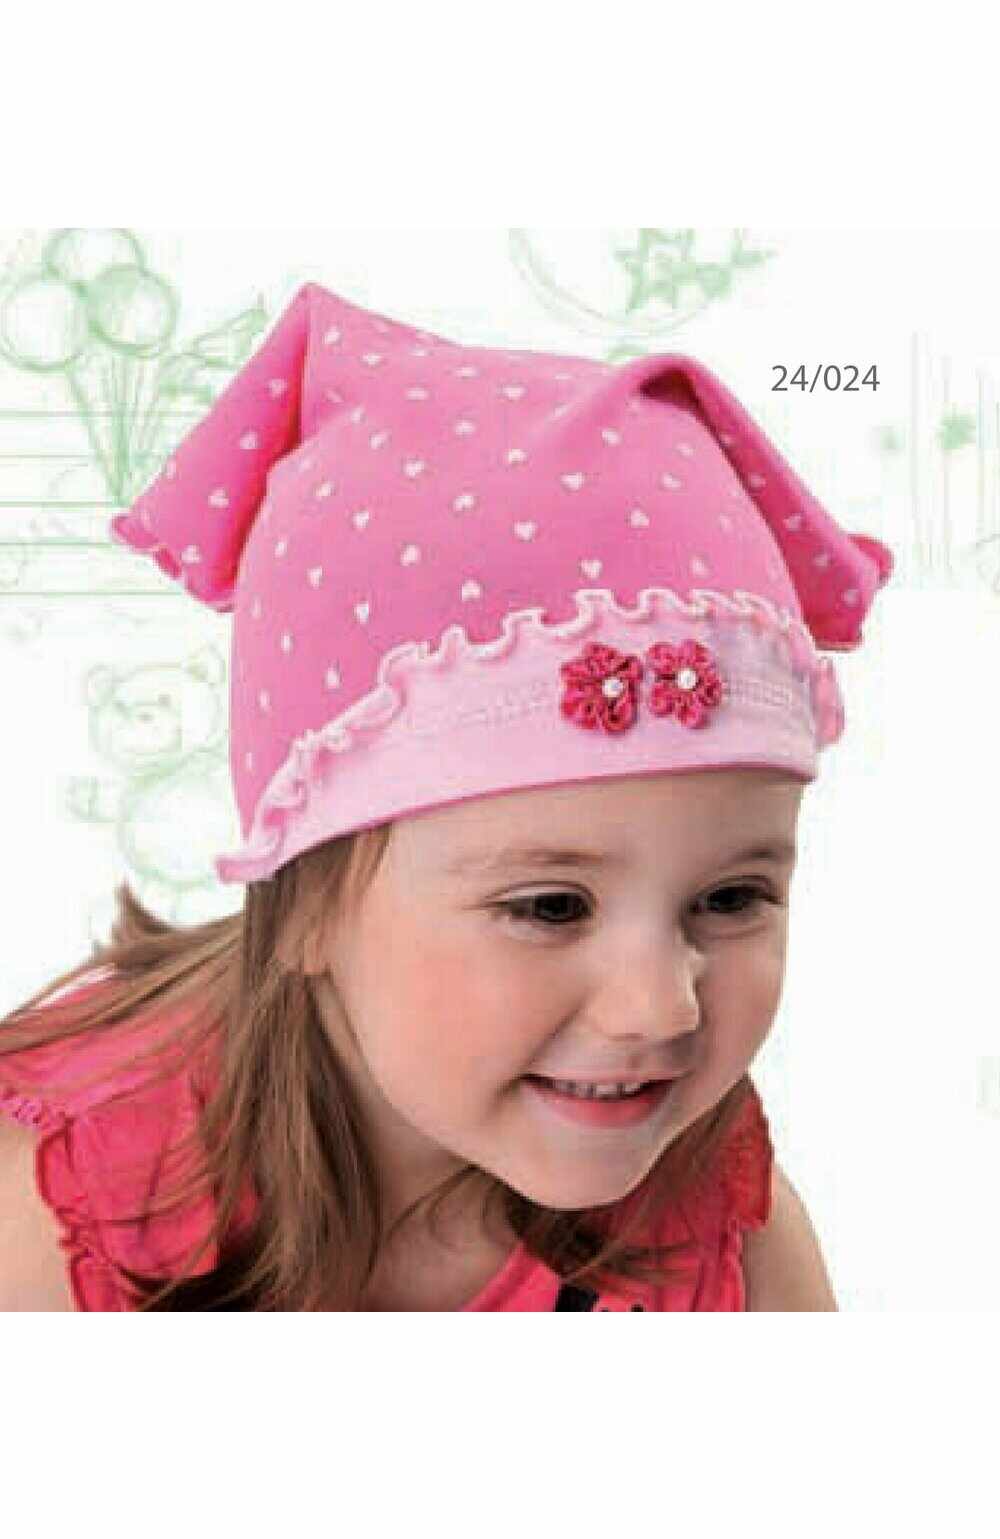 Batic din bumbac pentru fete 3-5 ani - AJS 24-024 roz inchis, roz deschis, fucsia, lila, mov, alb